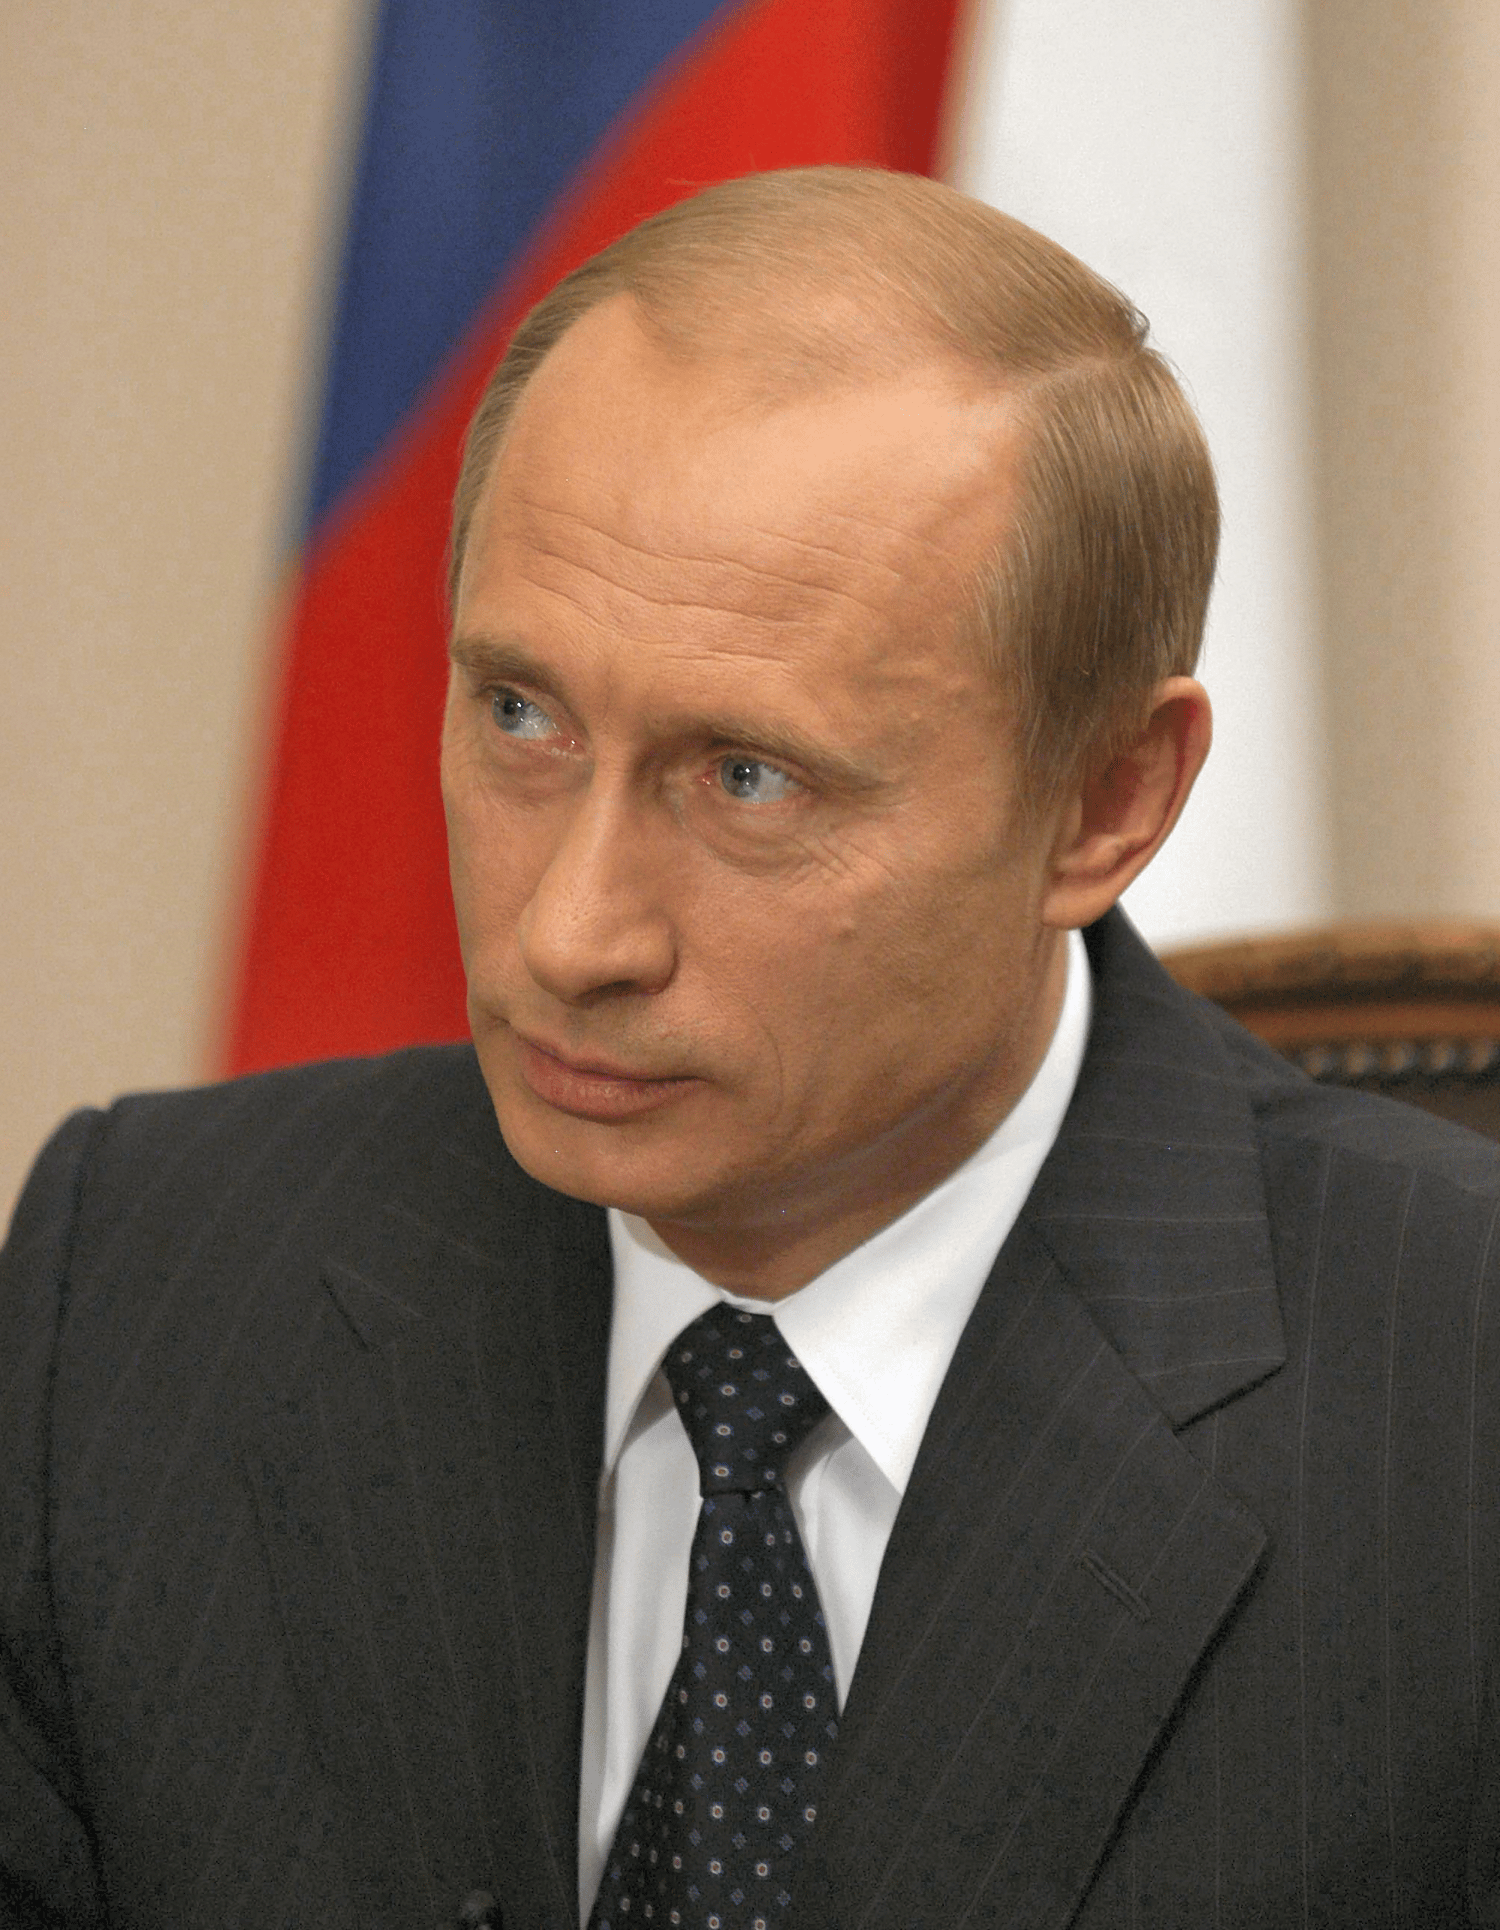 Photo Courtesy of Wikimedia Commons. By Kremlin.ru.